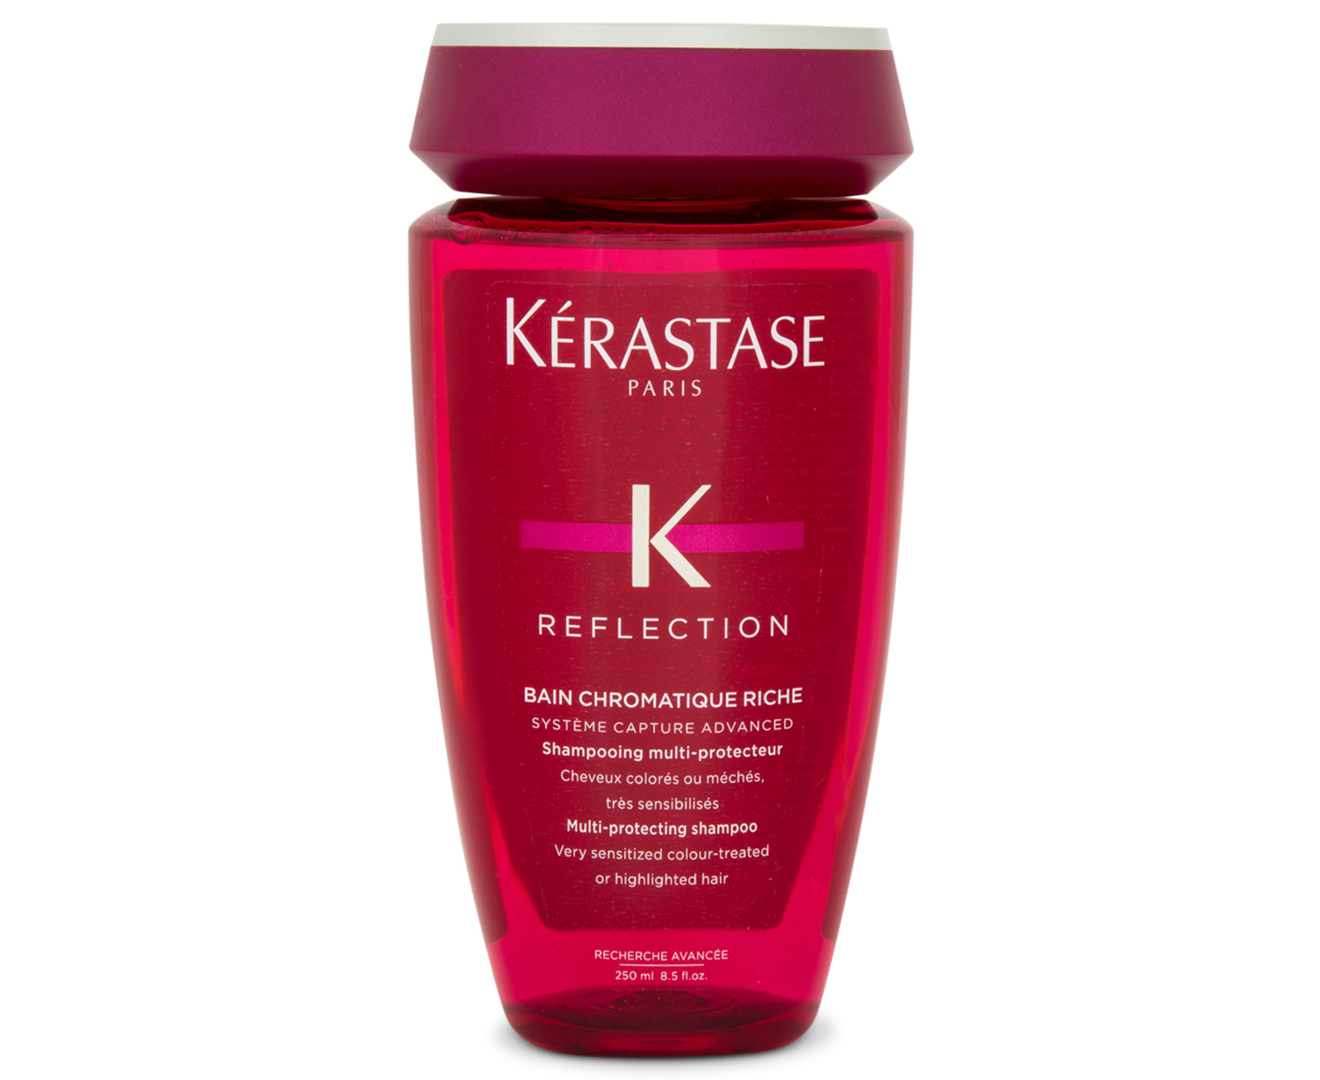 7. "Kerastase Reflection Bain Chromatique Riche Shampoo for Gray Hair" - wide 8